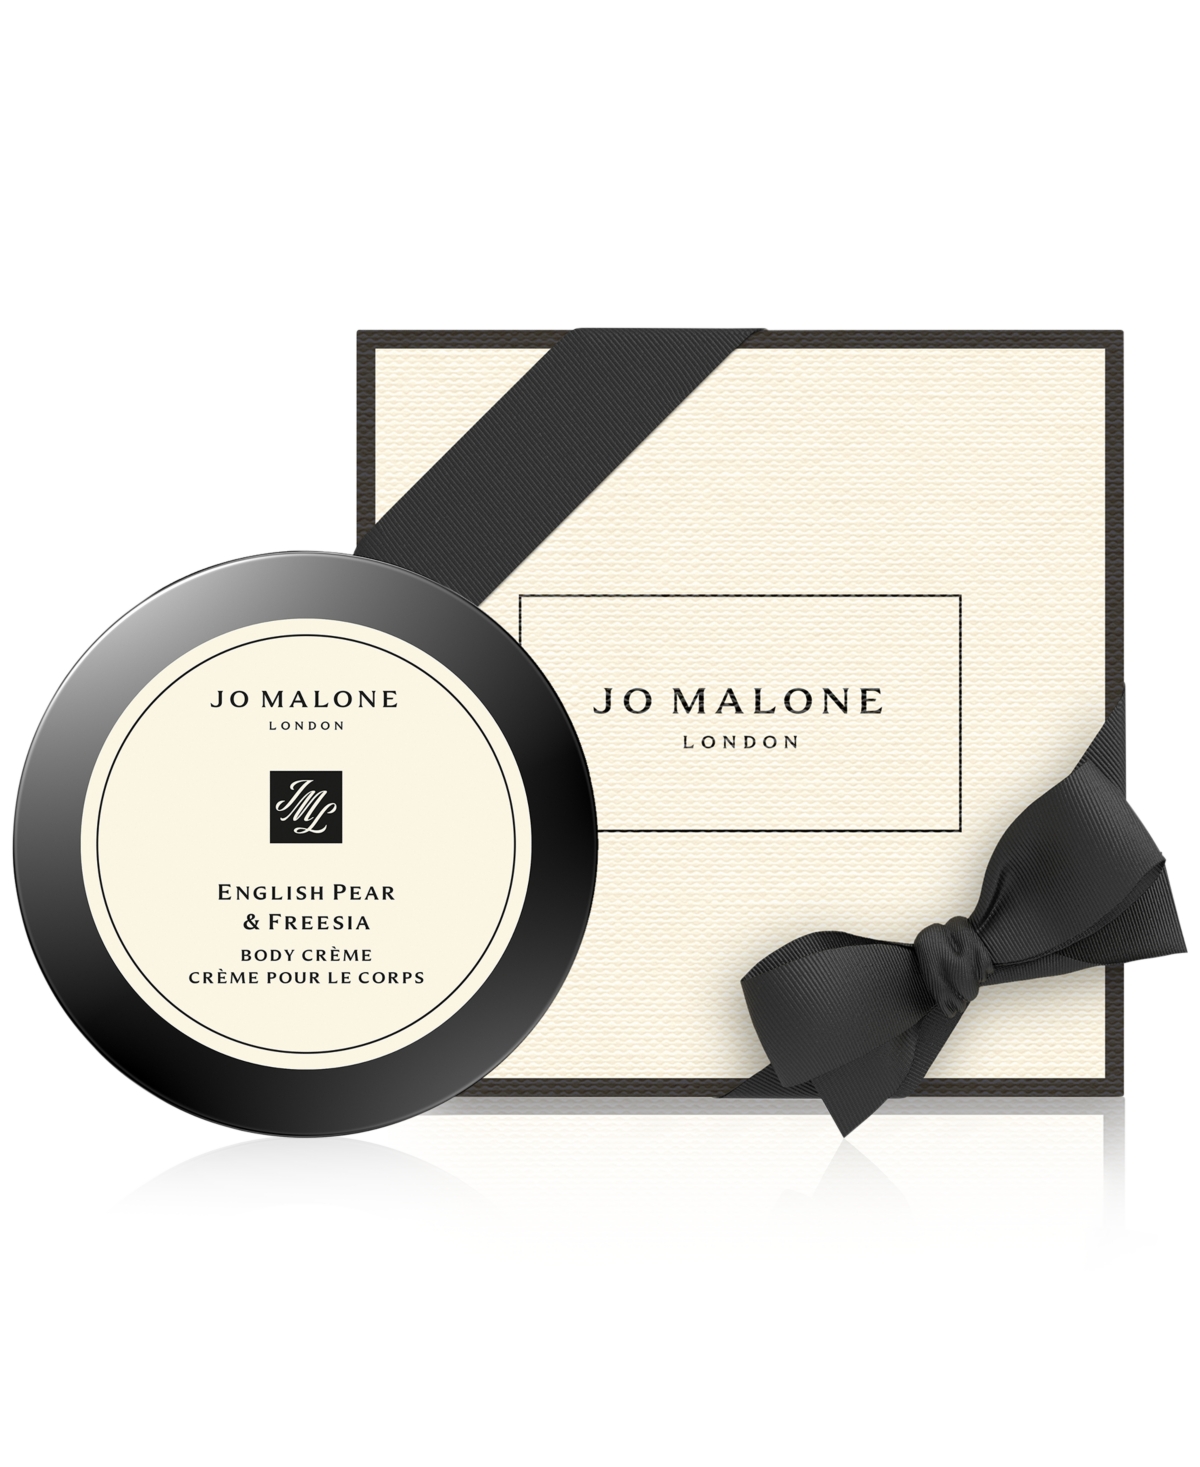 Jo Malone London English Pear & Freesia Body Creme, 1.7 oz.